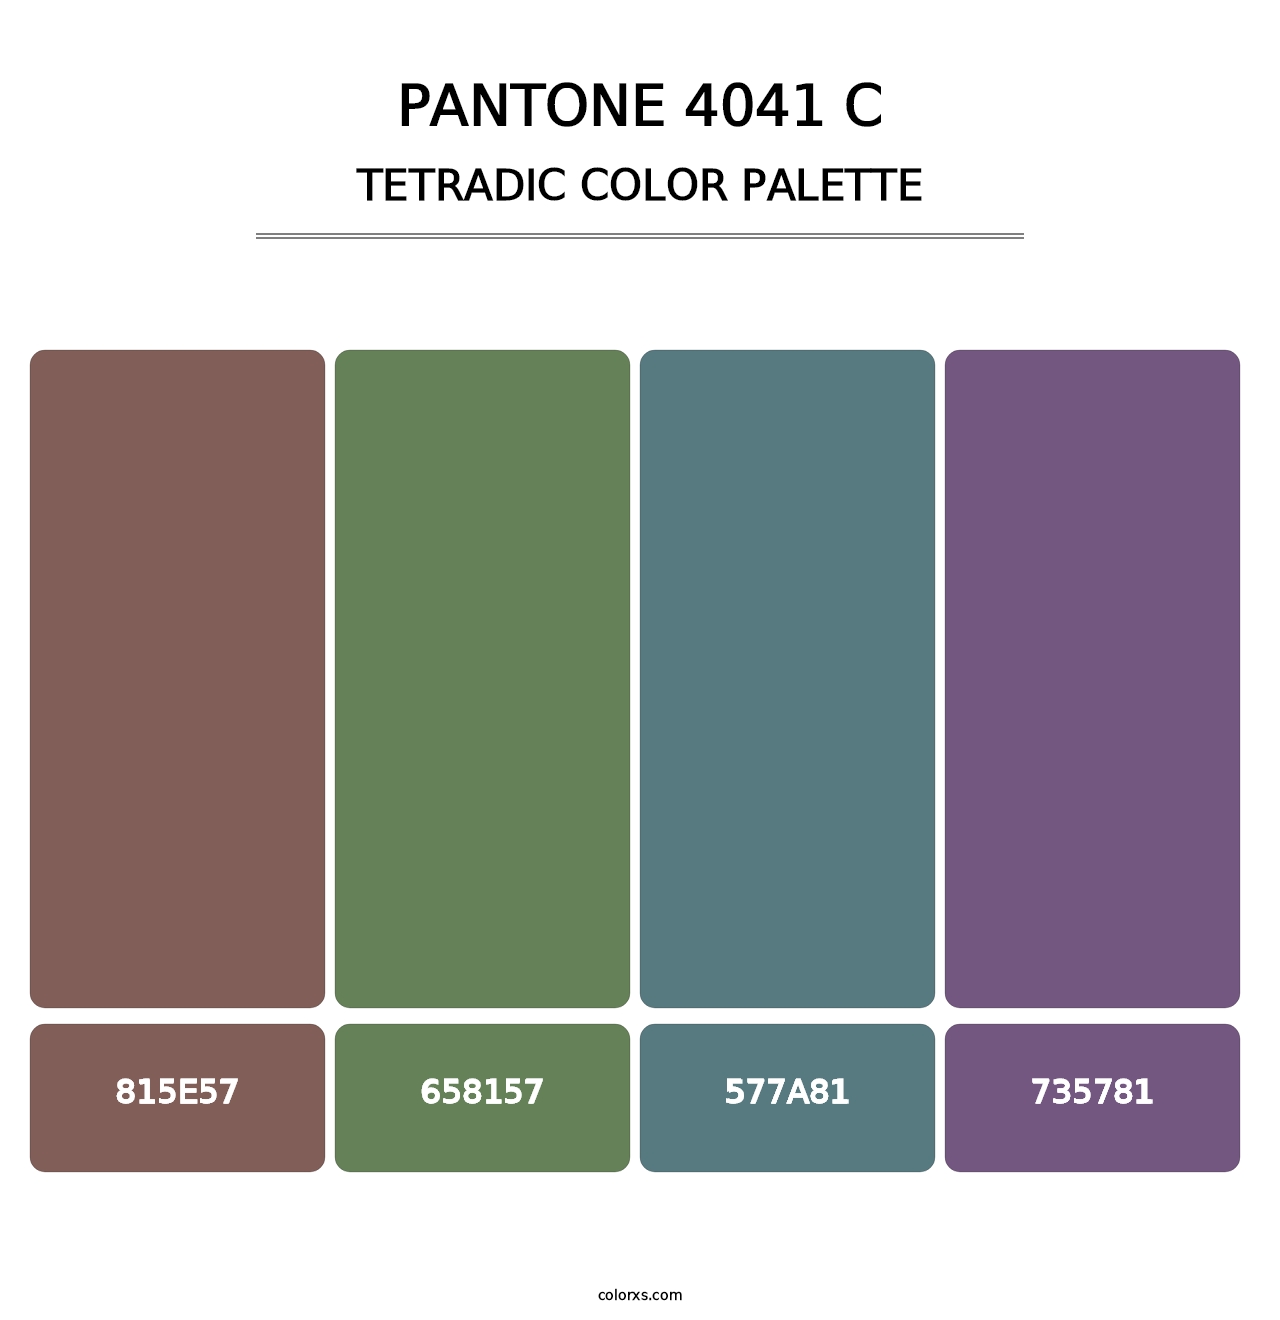 PANTONE 4041 C - Tetradic Color Palette